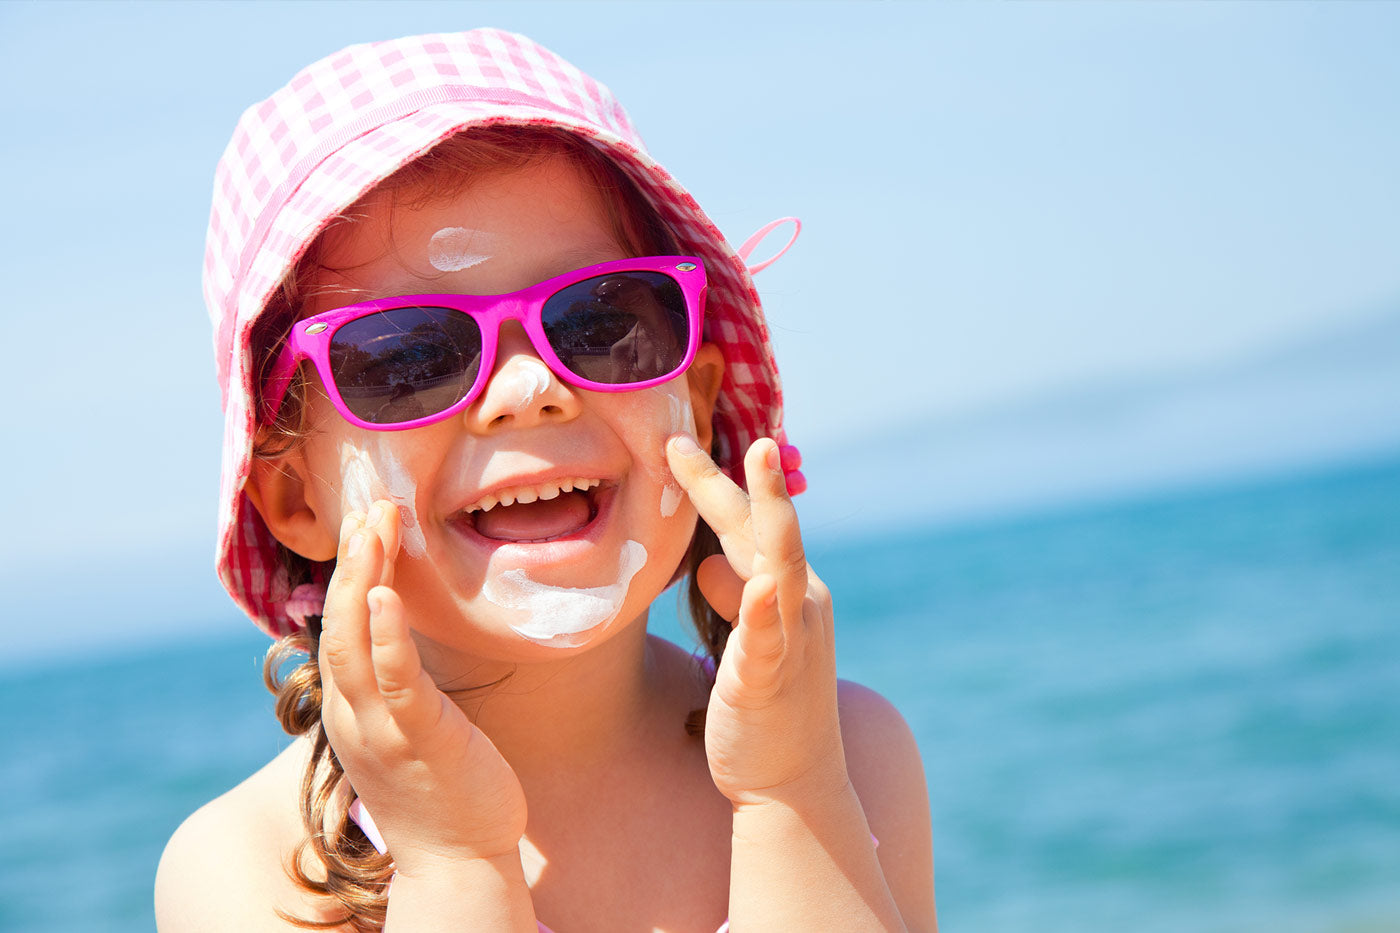 Child using sunscreen